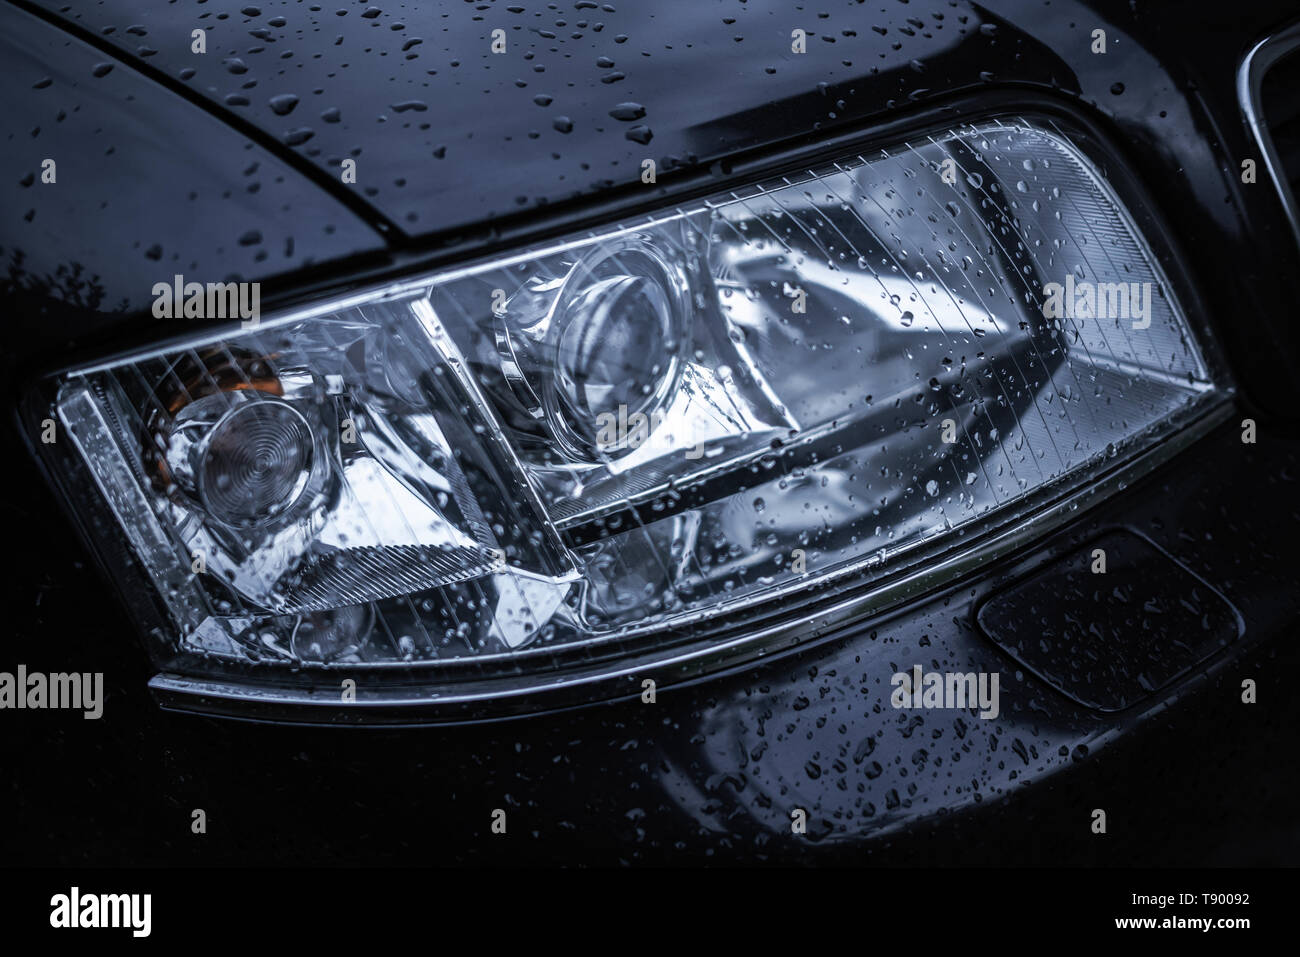 Wet car headlight. Stock Photo